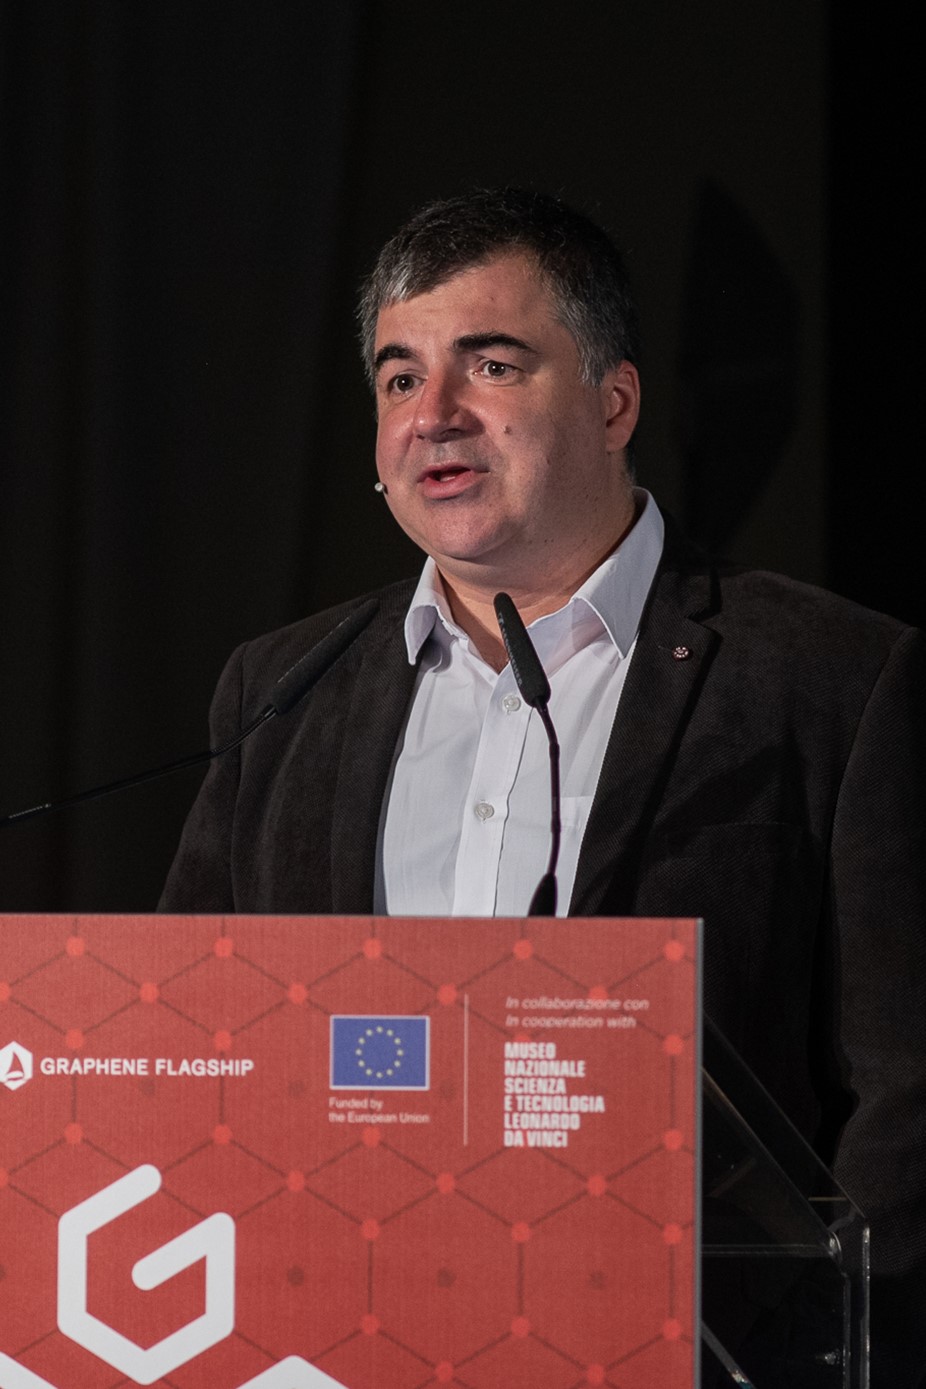 Konstantin Novoselov graphene discoverer and Nobel laureate speaks at the Graphene Flagship's 2018 Marketplace event